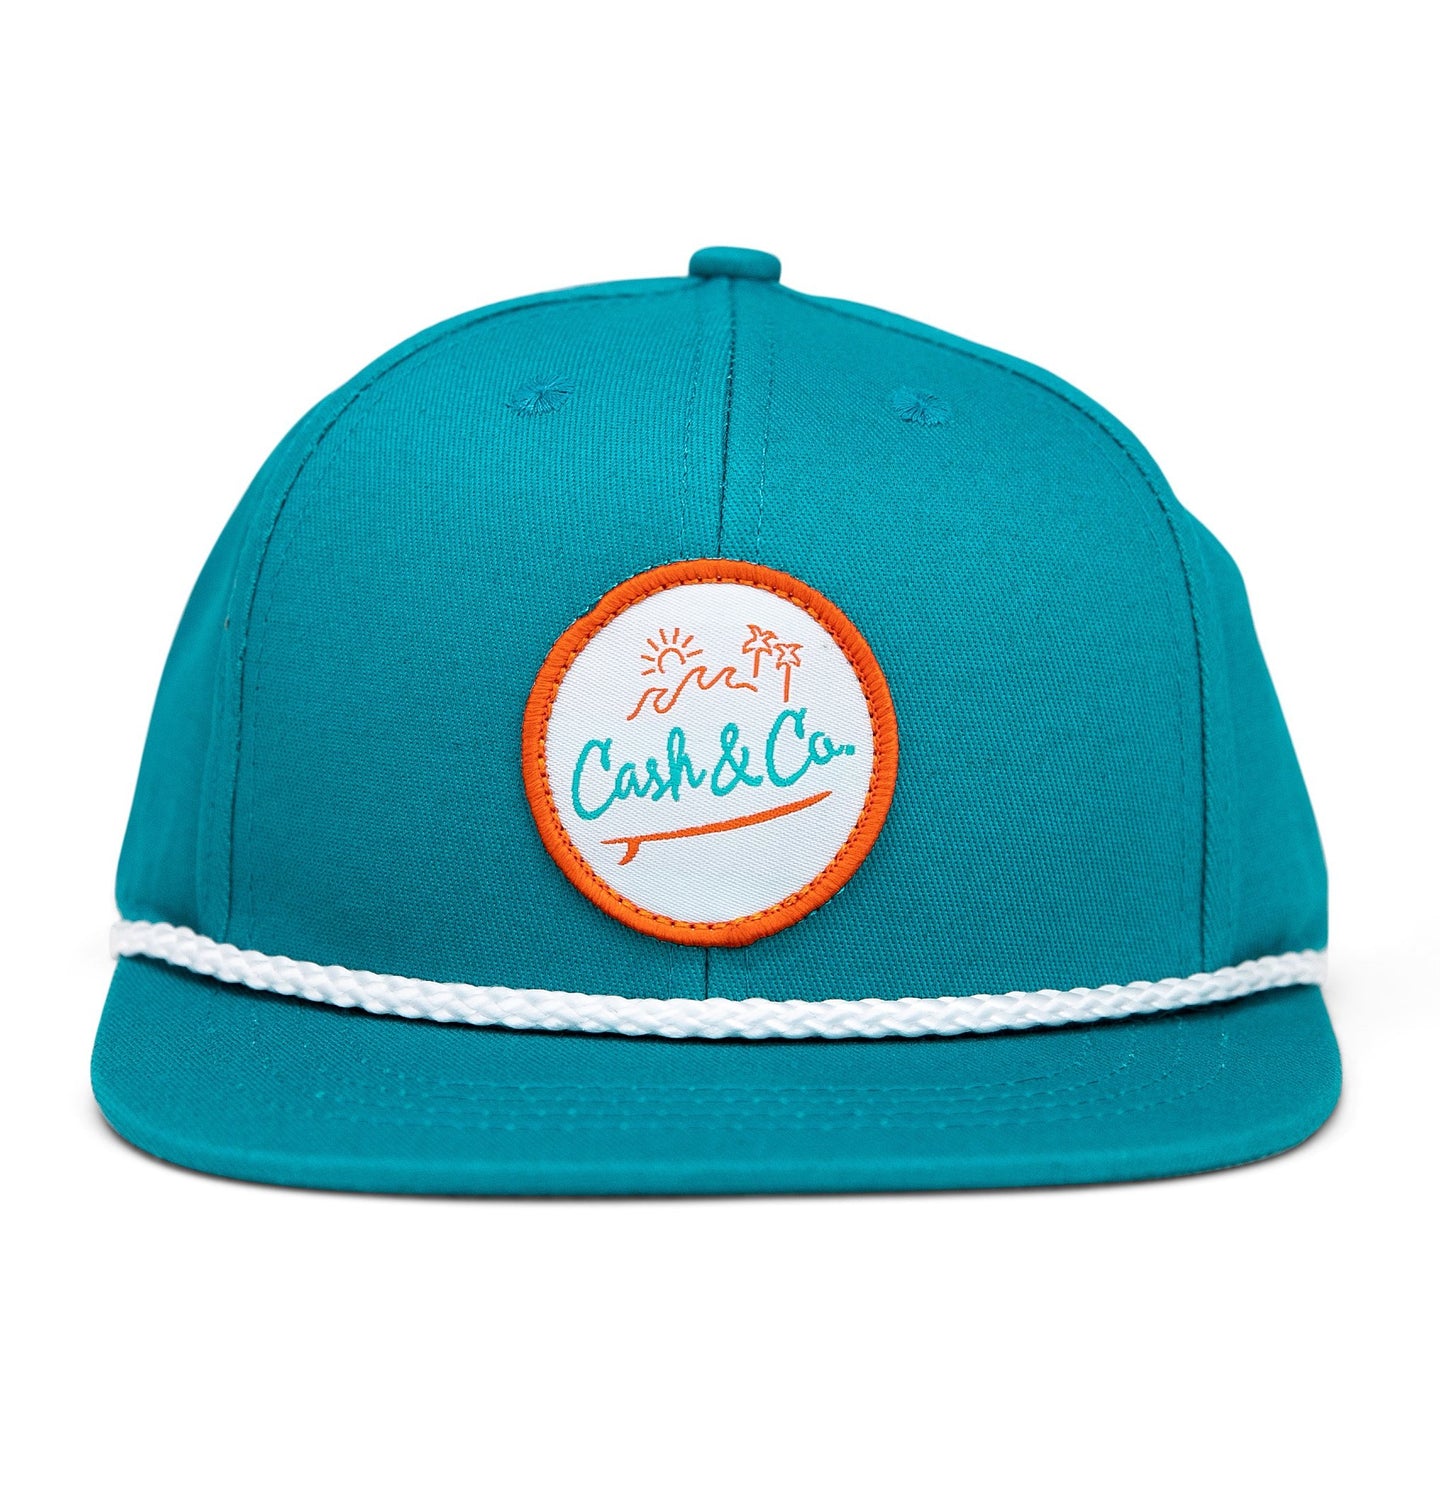 Cash & Co. - The Kahuna Hat